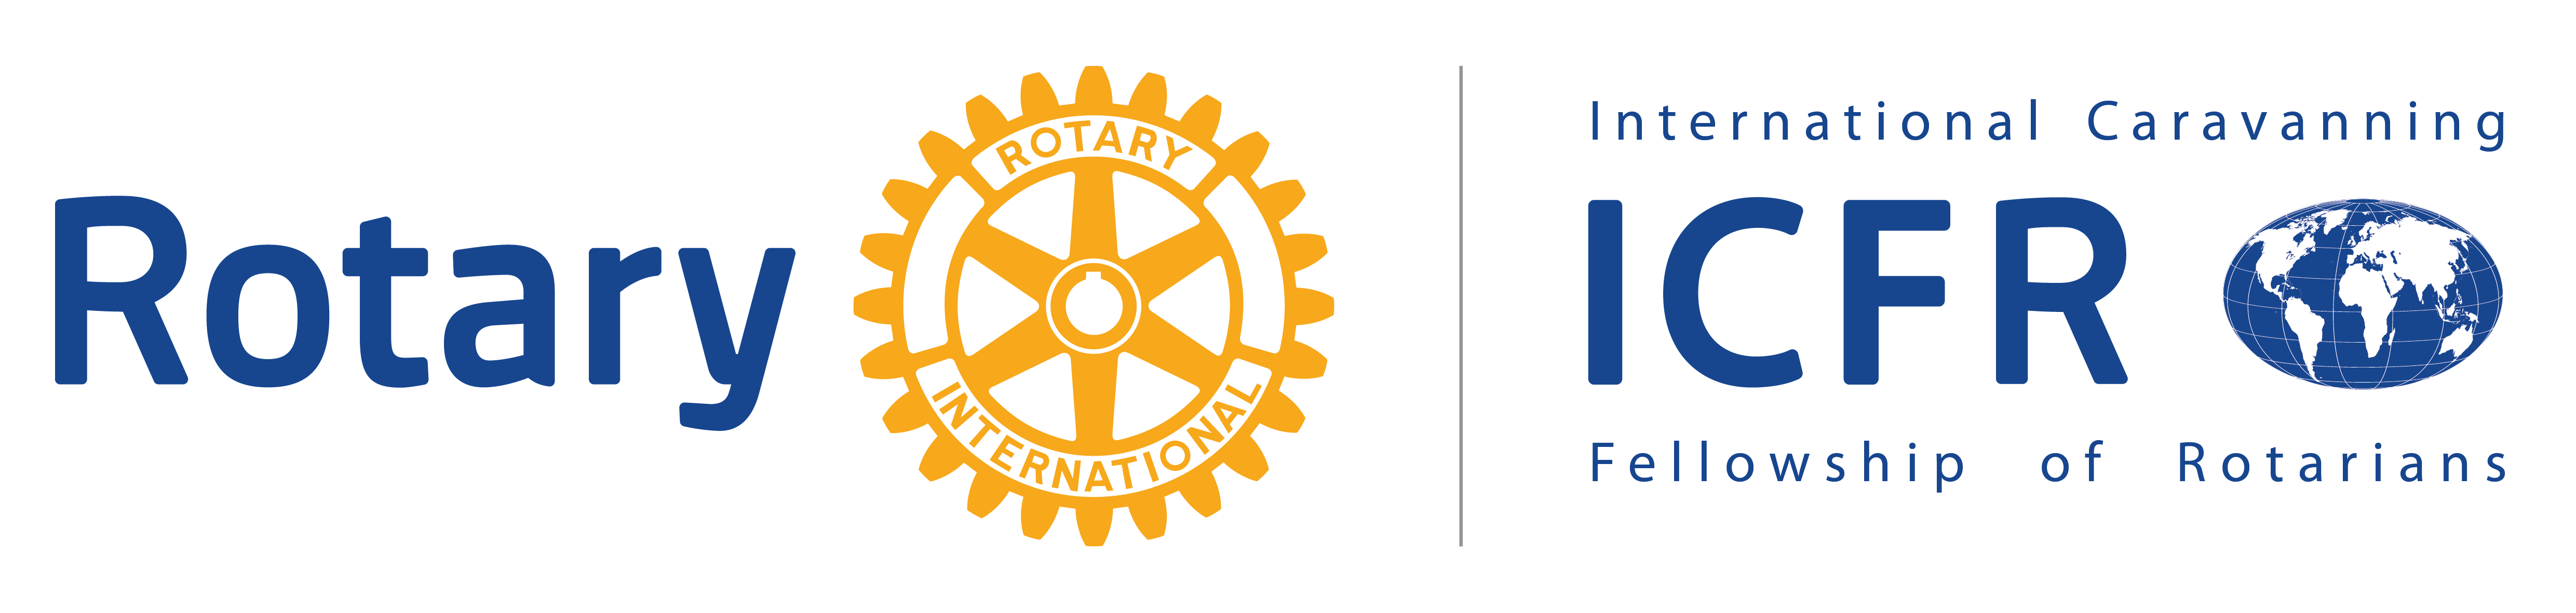 International Caravanning Fellowship of Rotarians (ICFR)